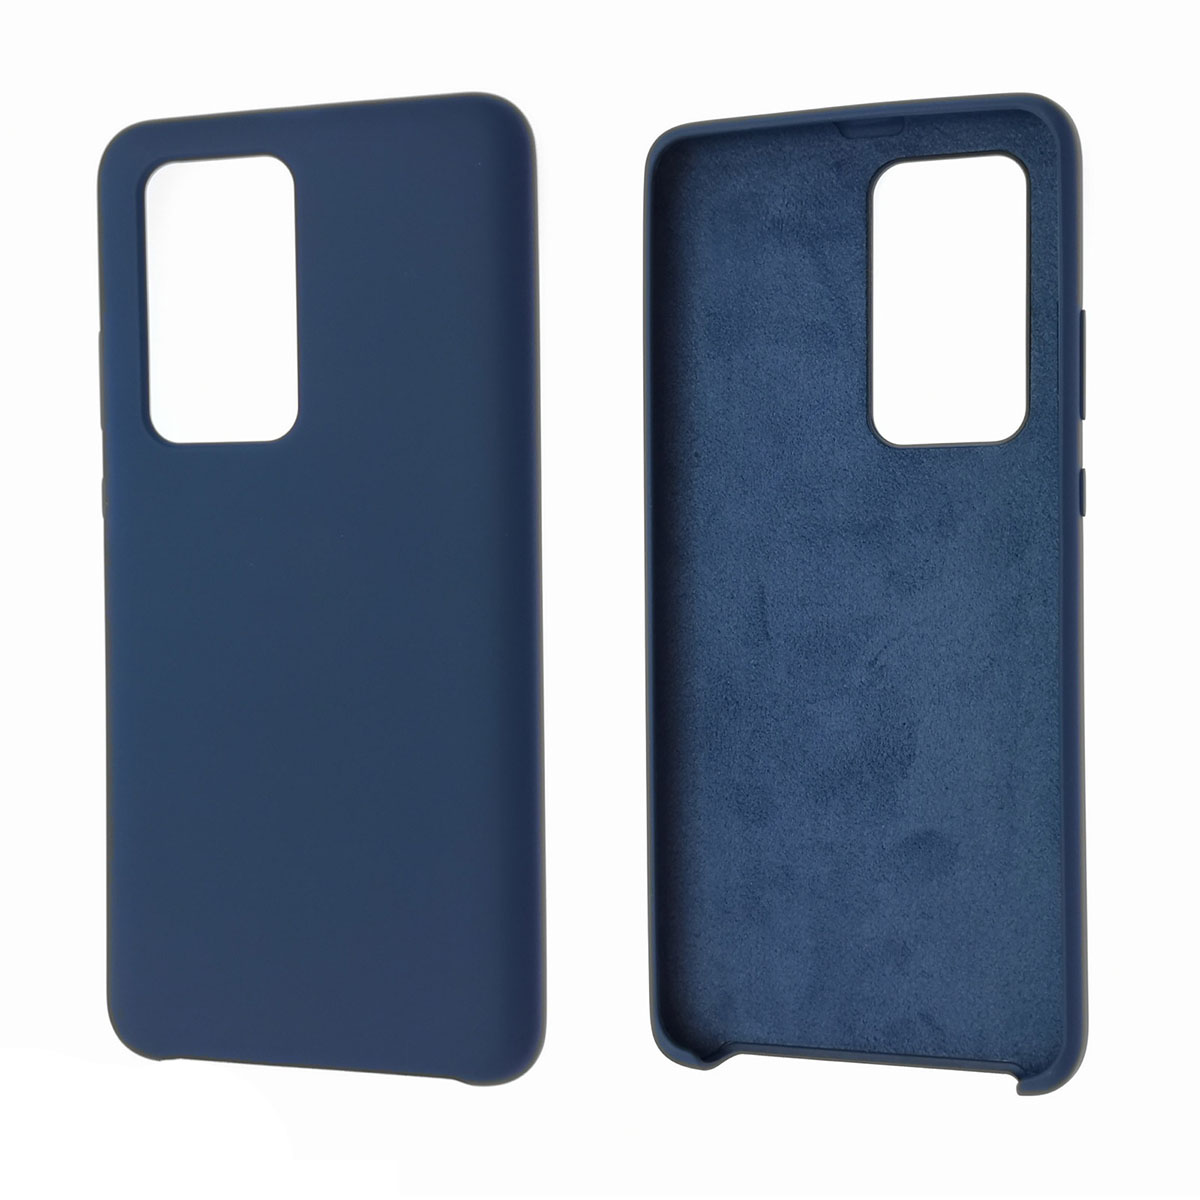 Чехол накладка Silicon Cover для HUAWEI P40 Pro (ELS-NX9), силикон, бархат, цвет синий кобальт.